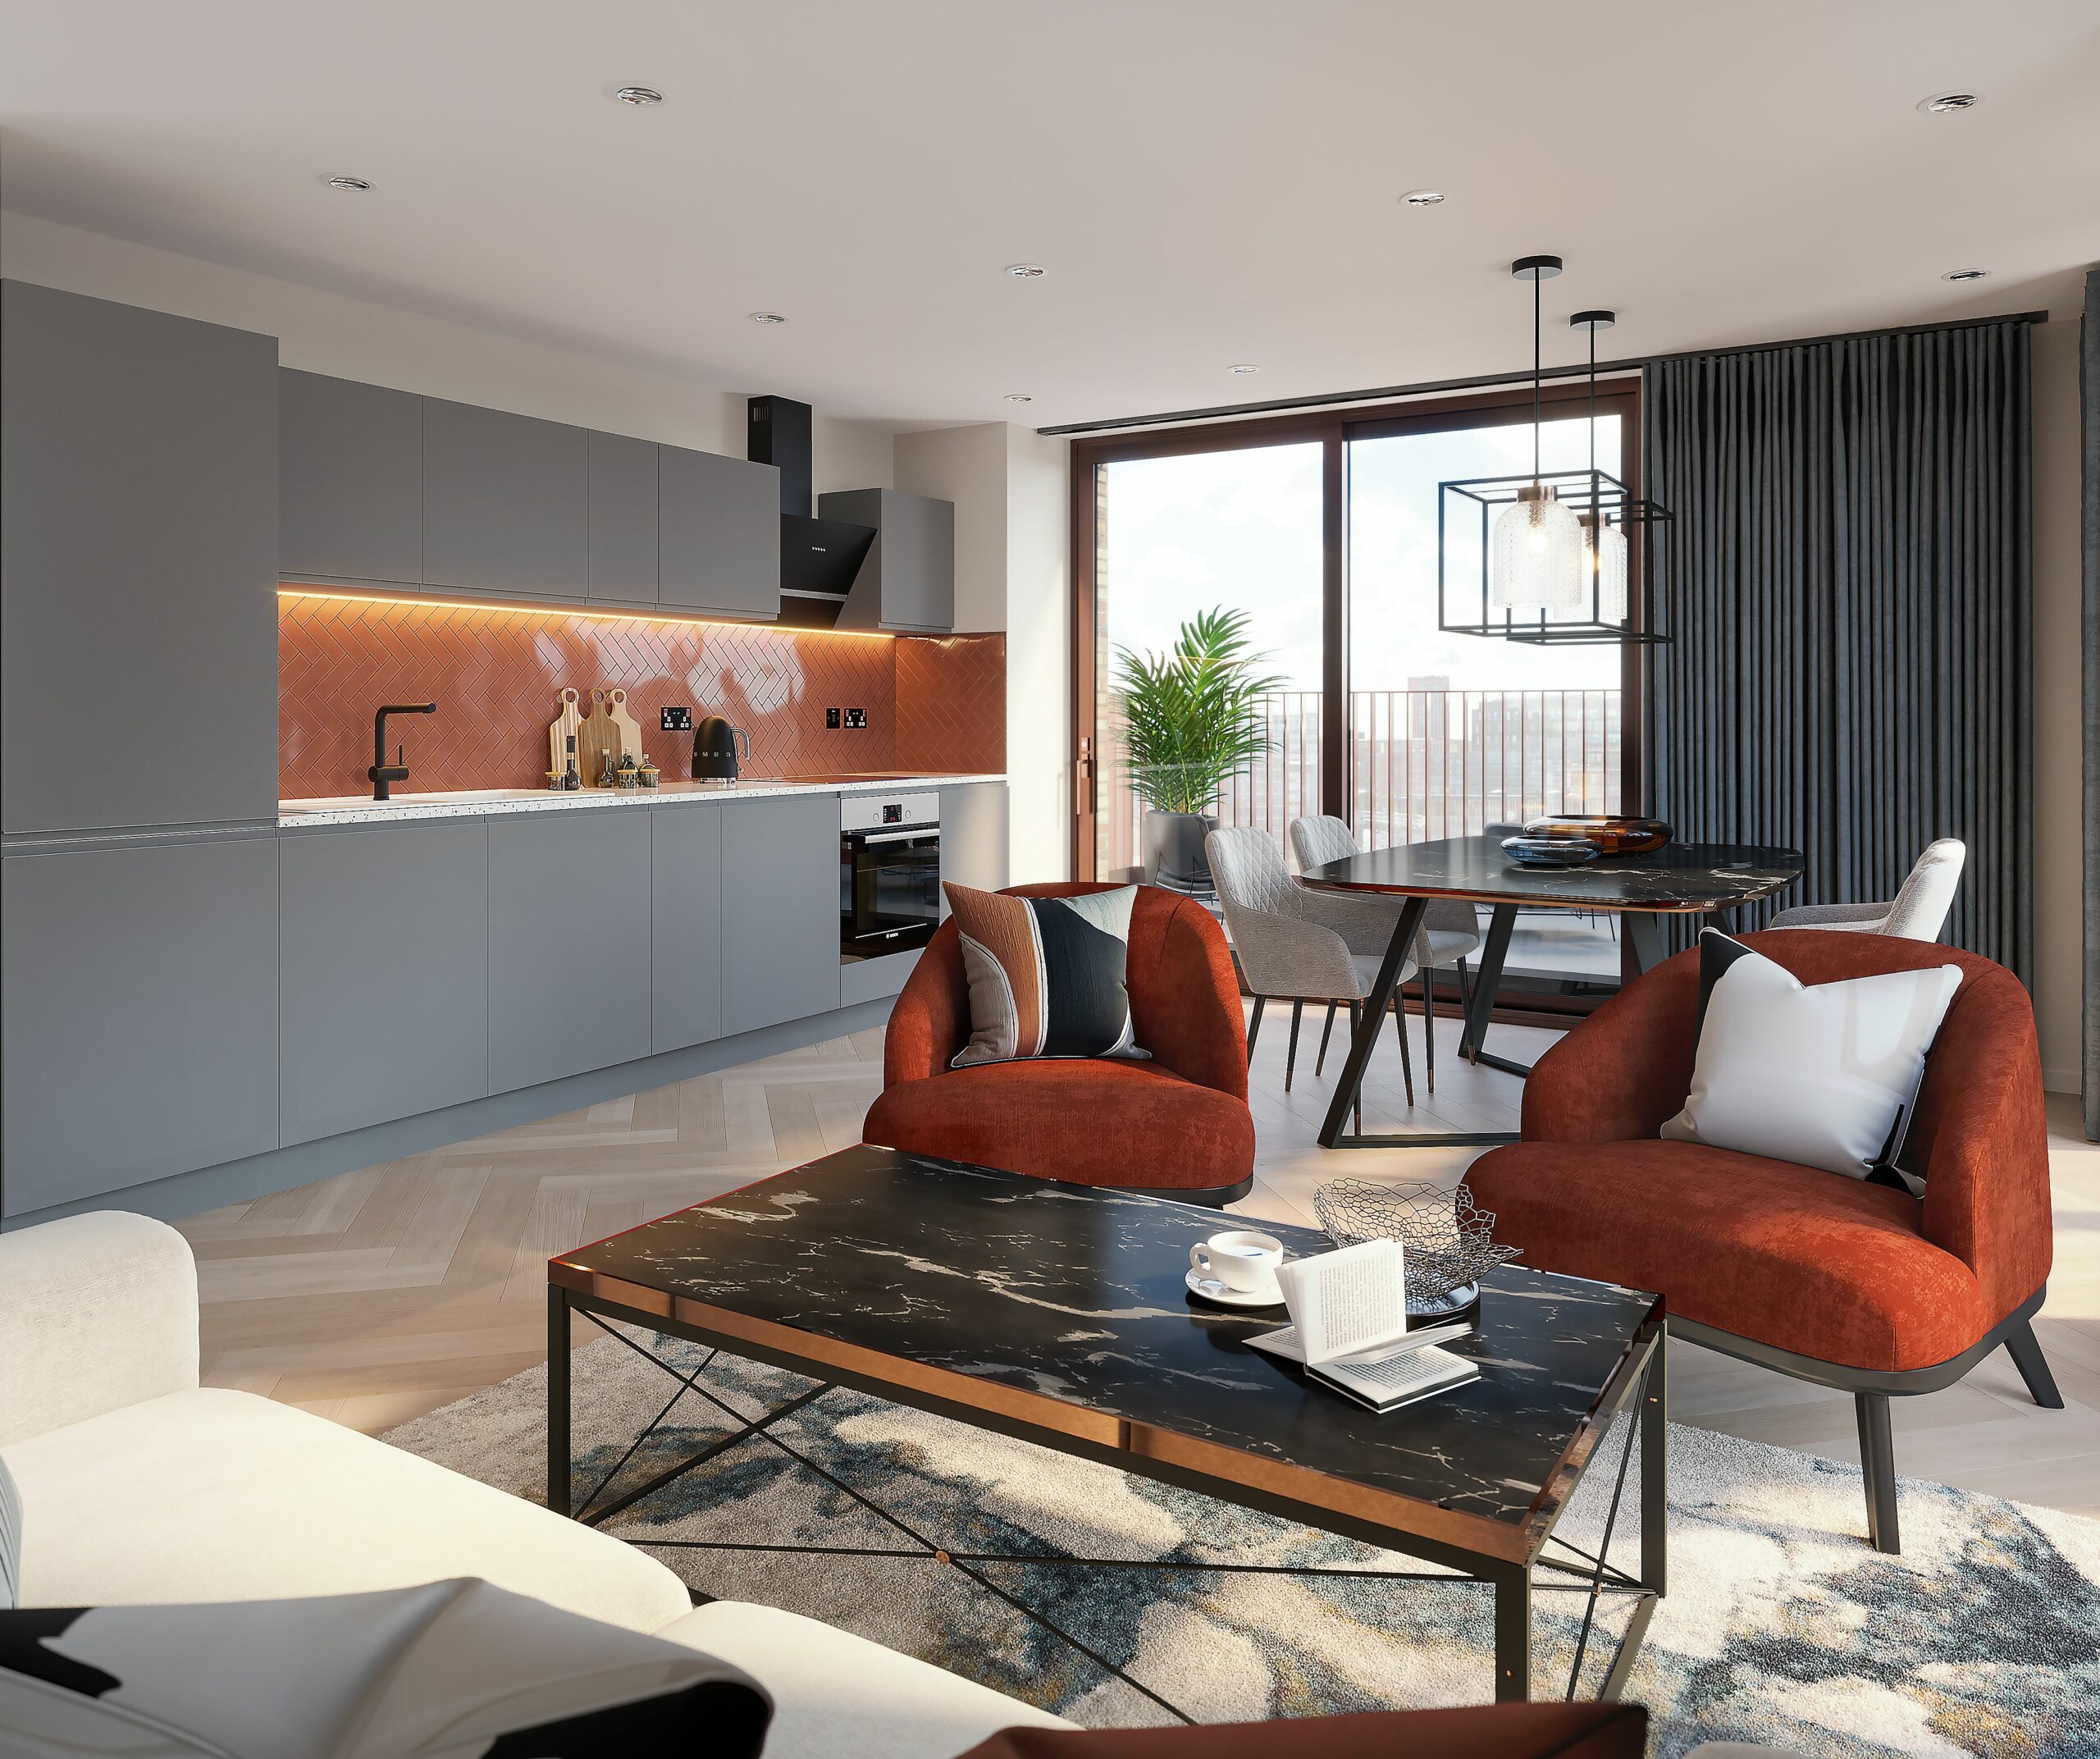 interior kitchen diner and lounge 3d cgi visualisation 